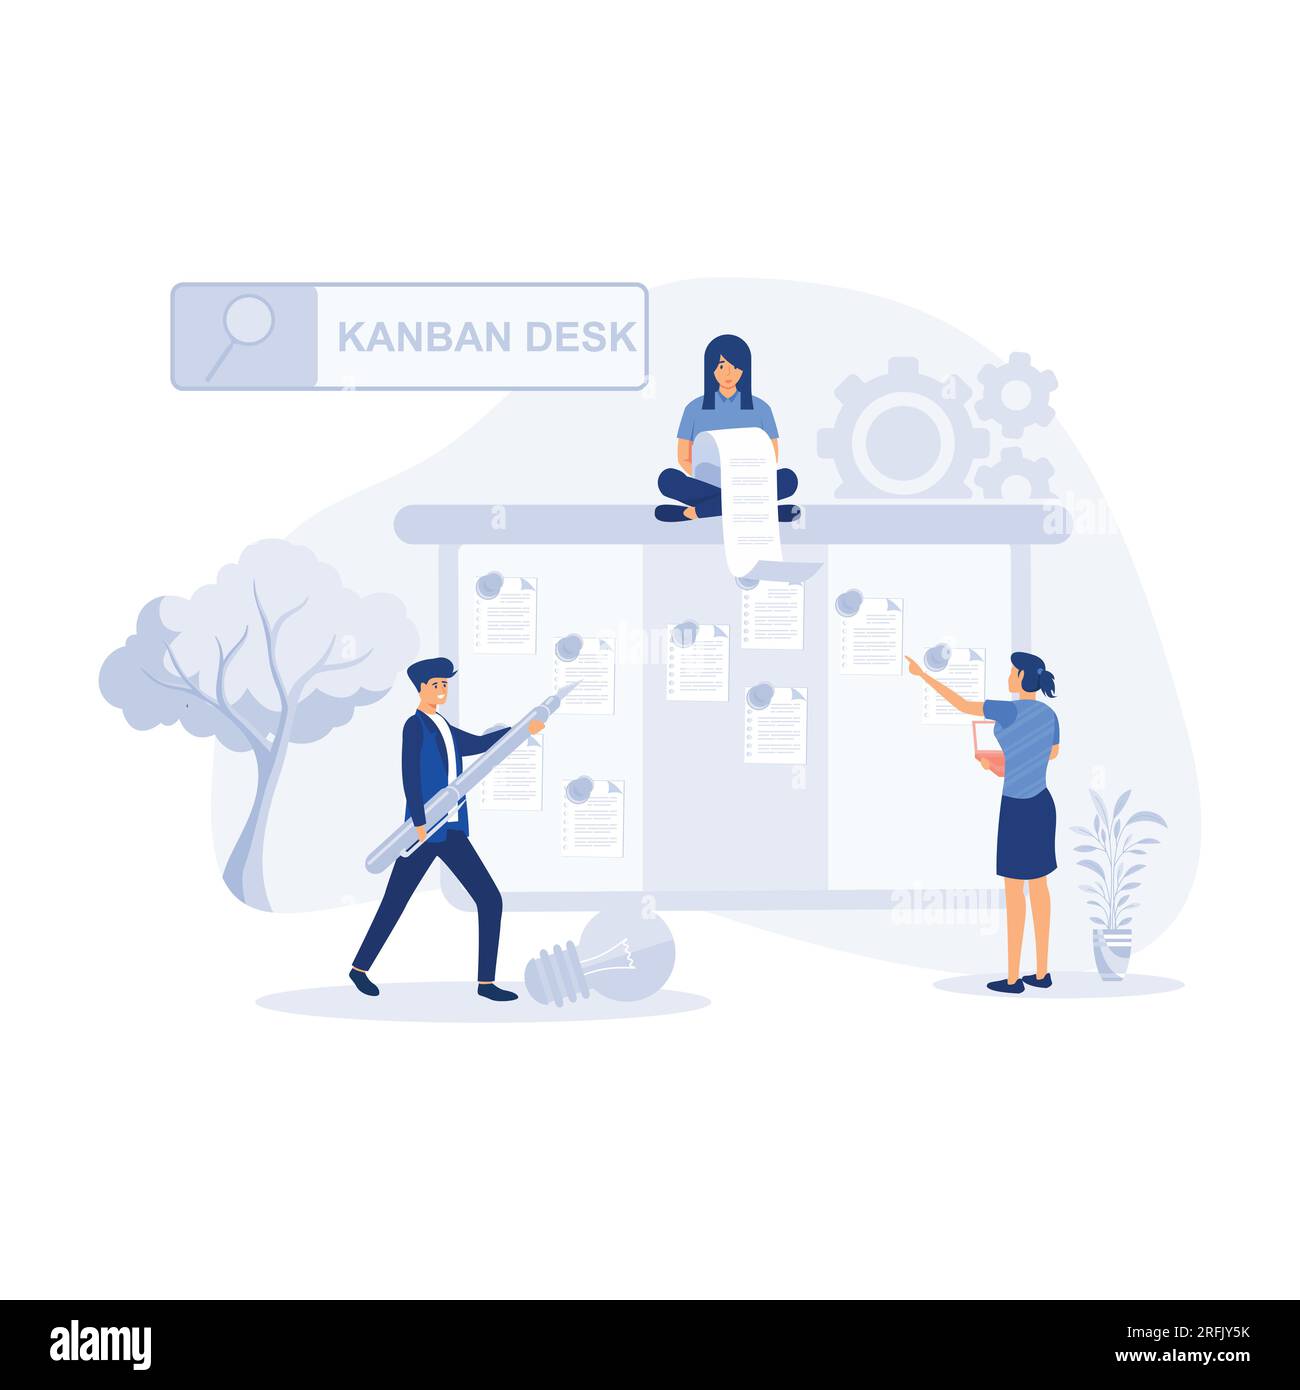 Online-Kanban-Board-App, agile visuelle Projektmanagementmethode, Teamwork-Konzepte, flache Vektordarstellung Stock Vektor